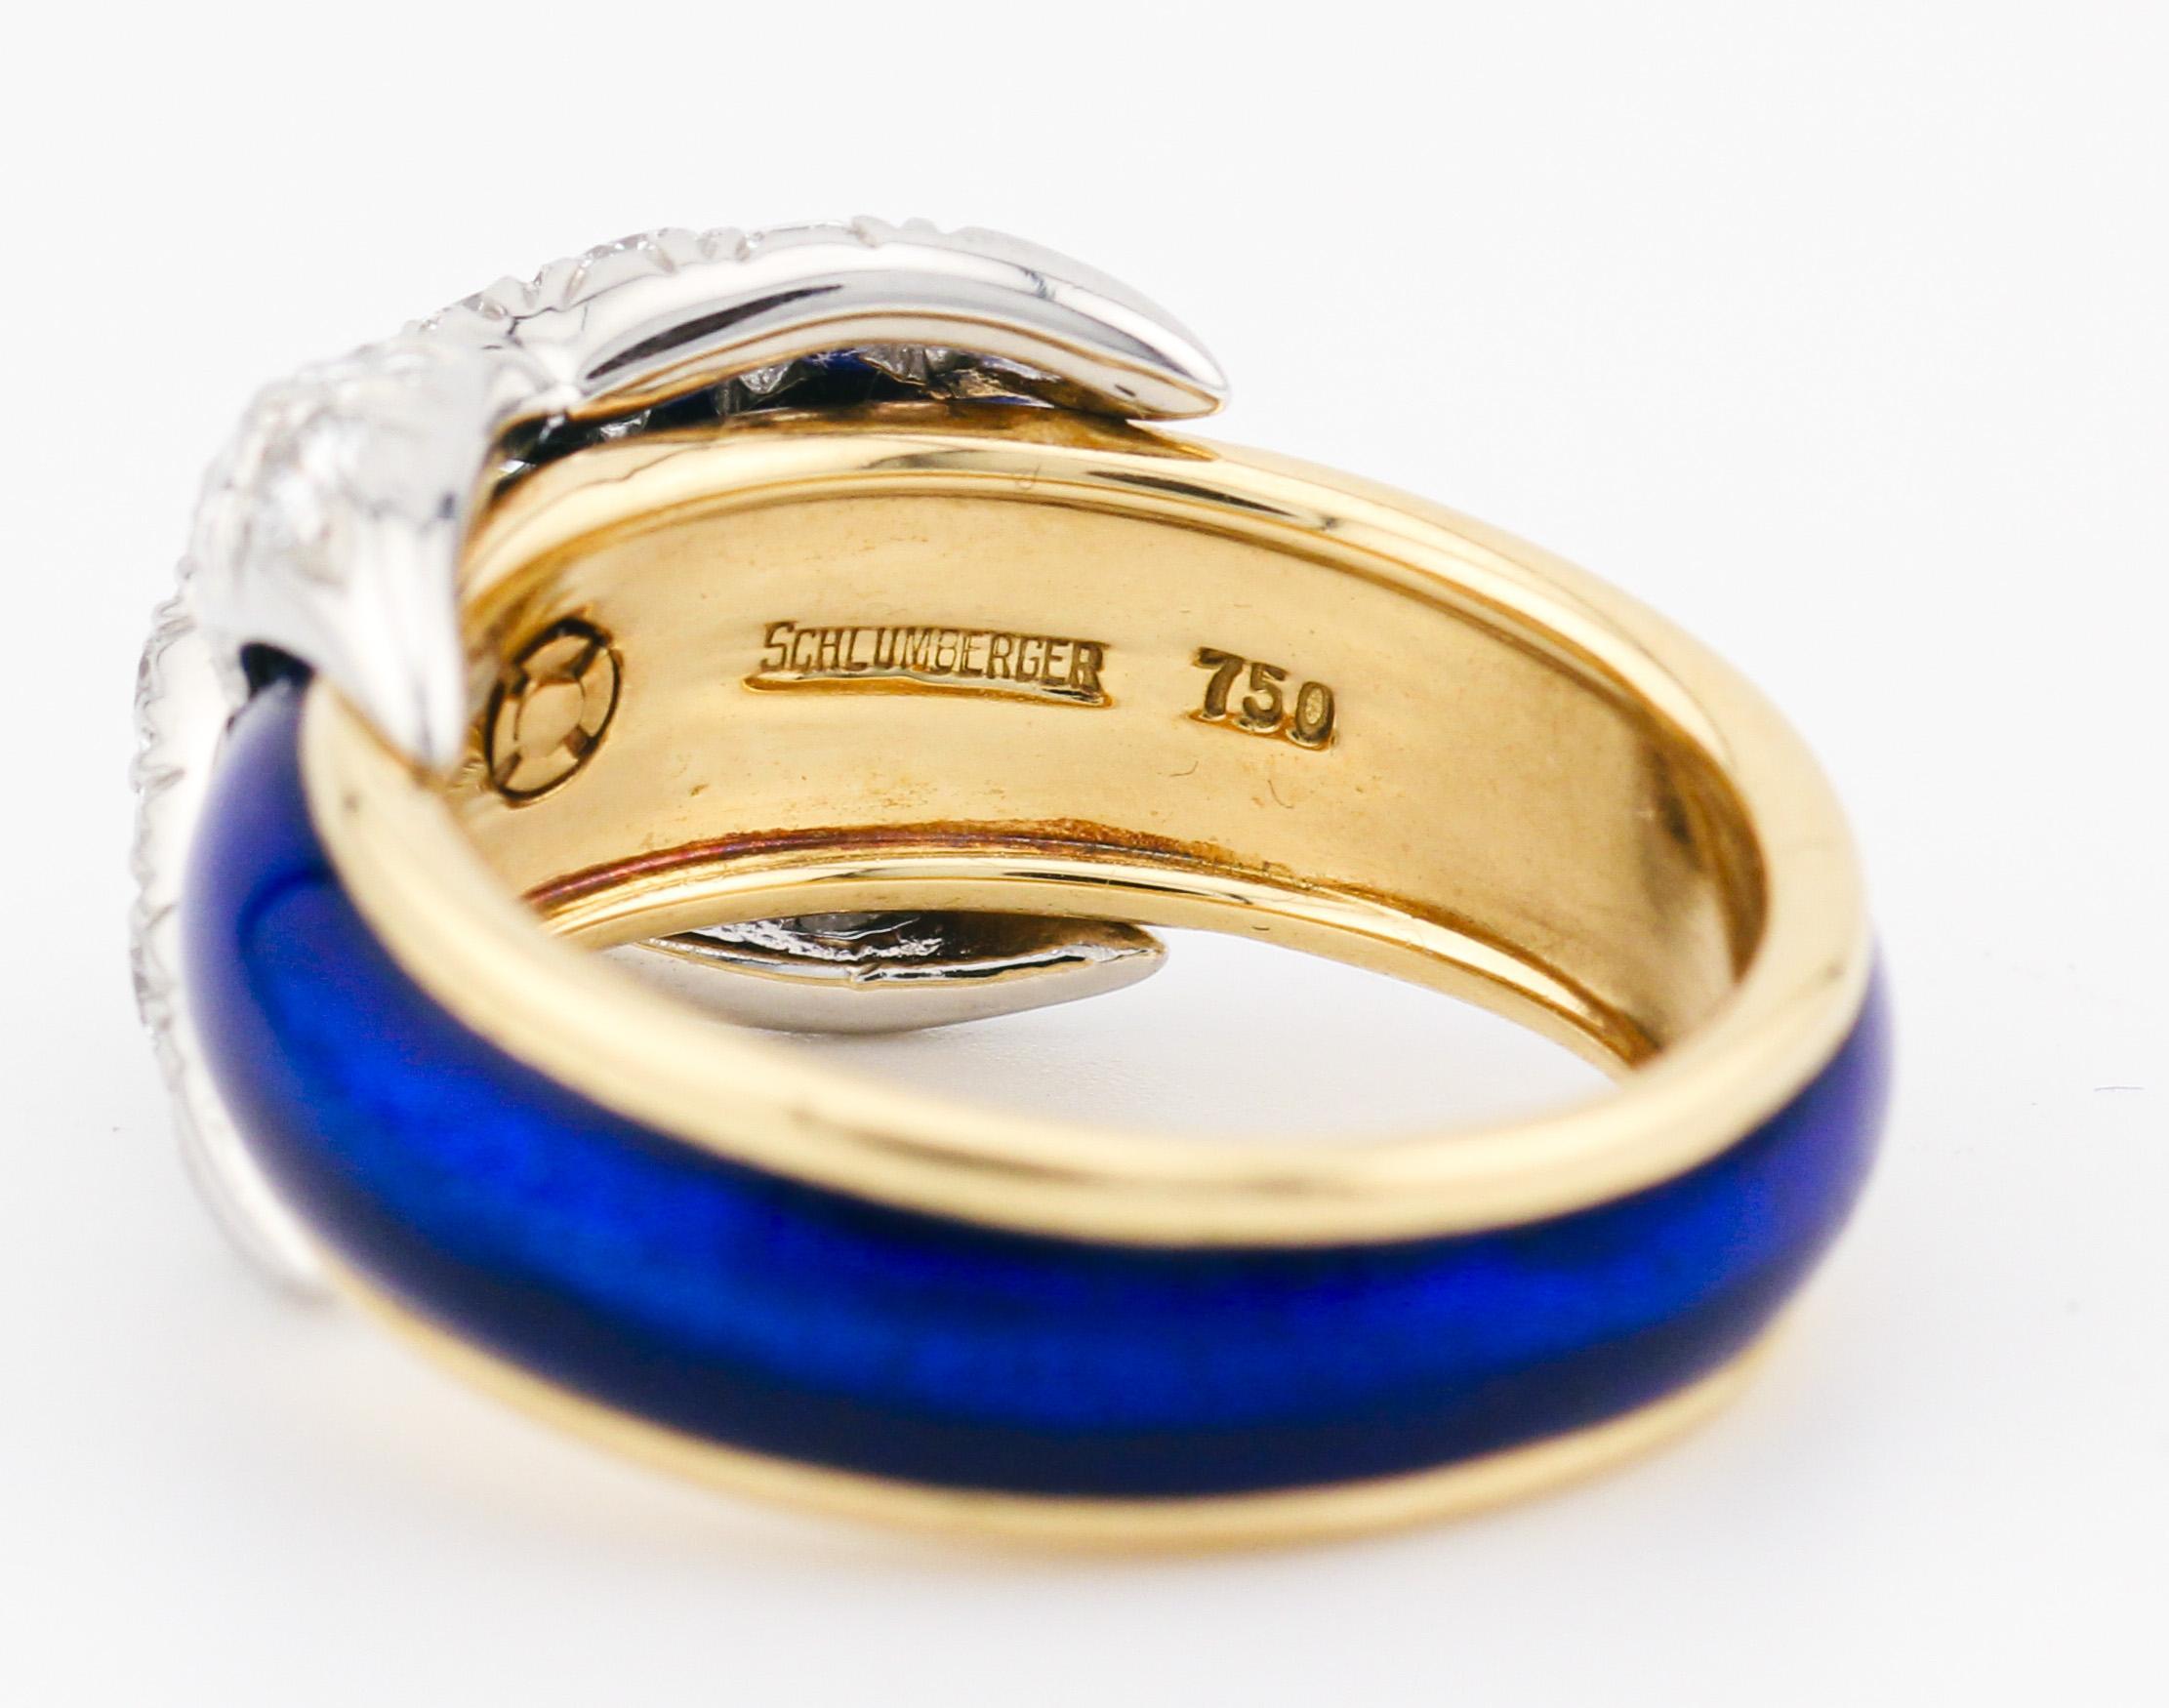 Tiffany & Co. Schlumberger Blue Enamel Diamond 18K Yellow Gold X Ring Size 5.25 1